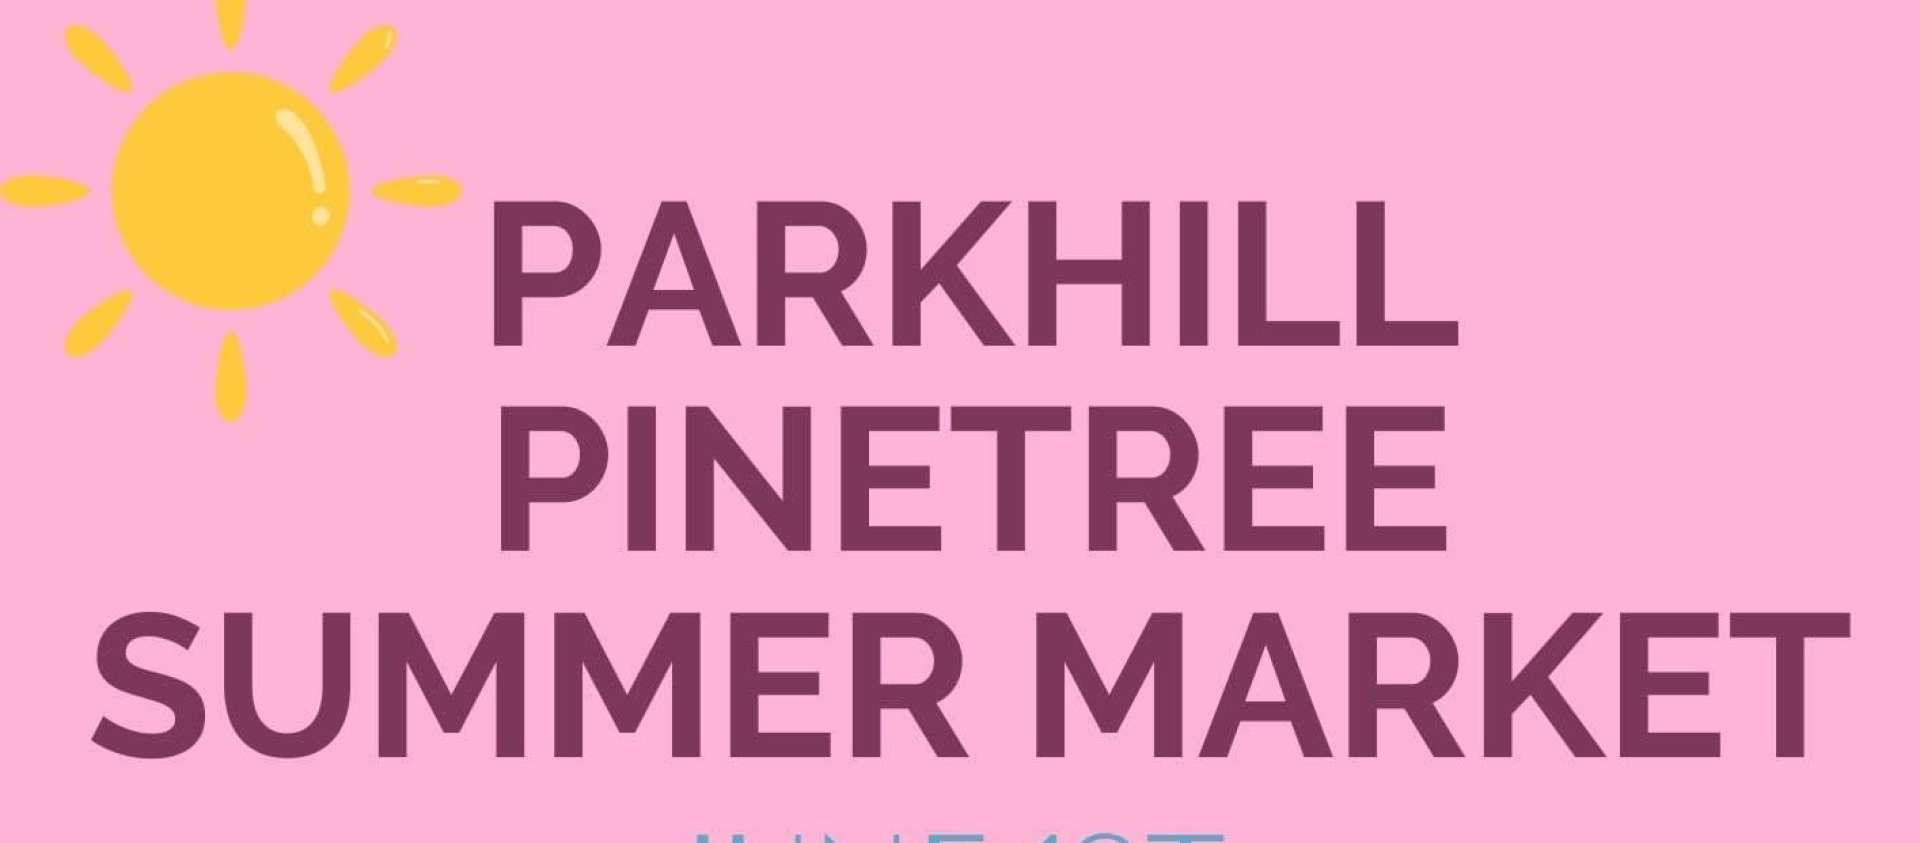 Pinetree Market